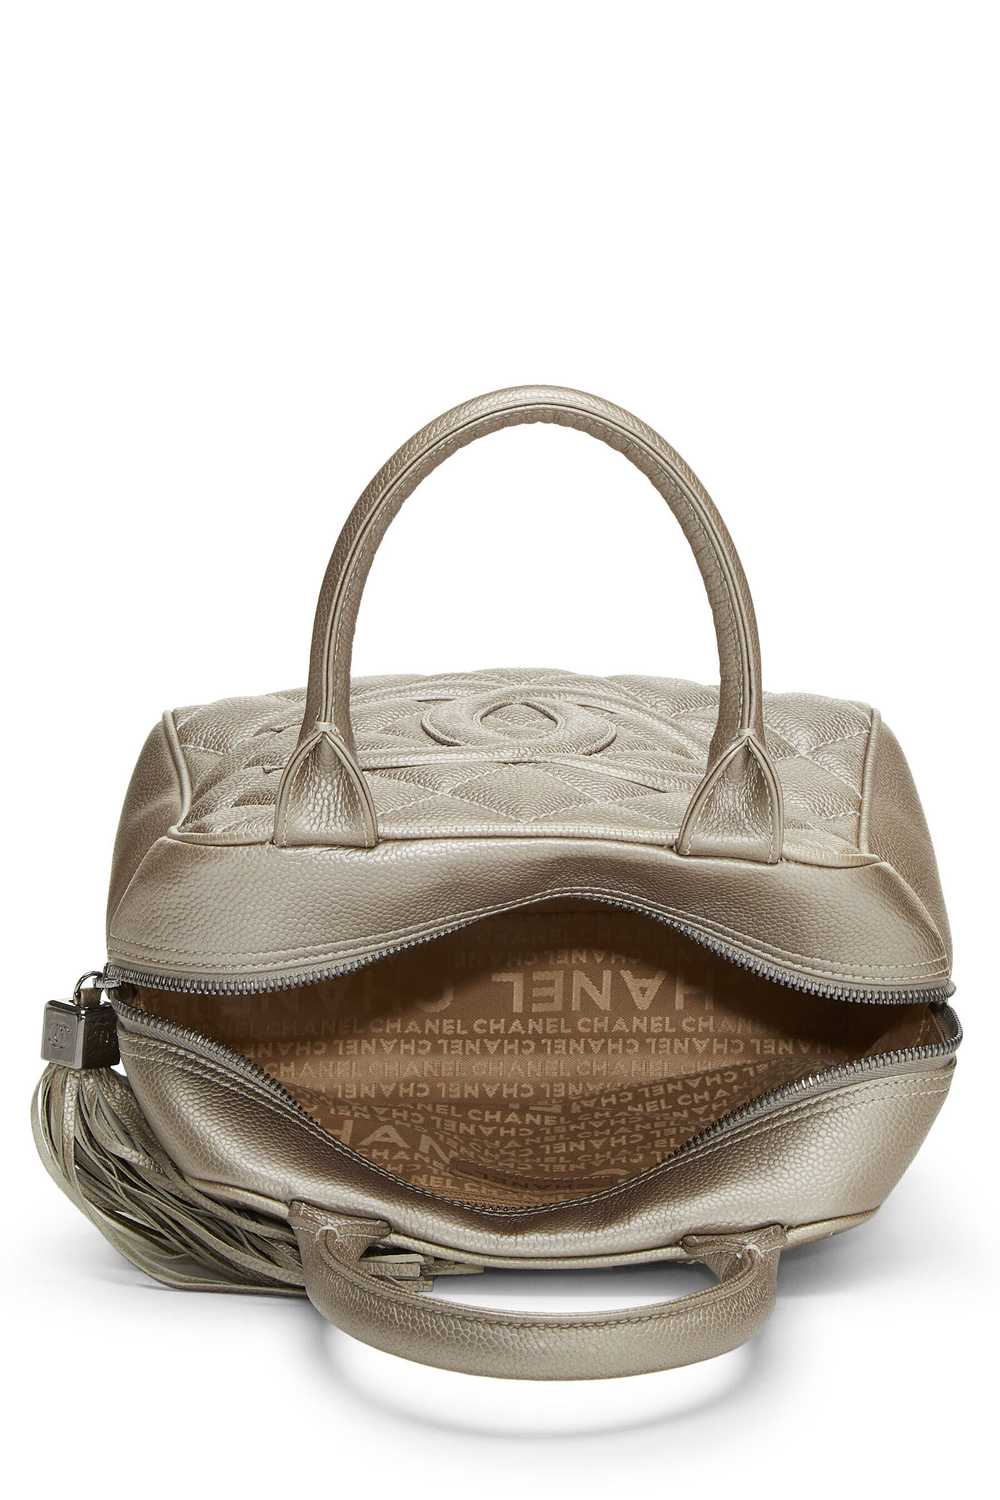 Metallic Silver Quilted Caviar Tassel Handbag - image 6